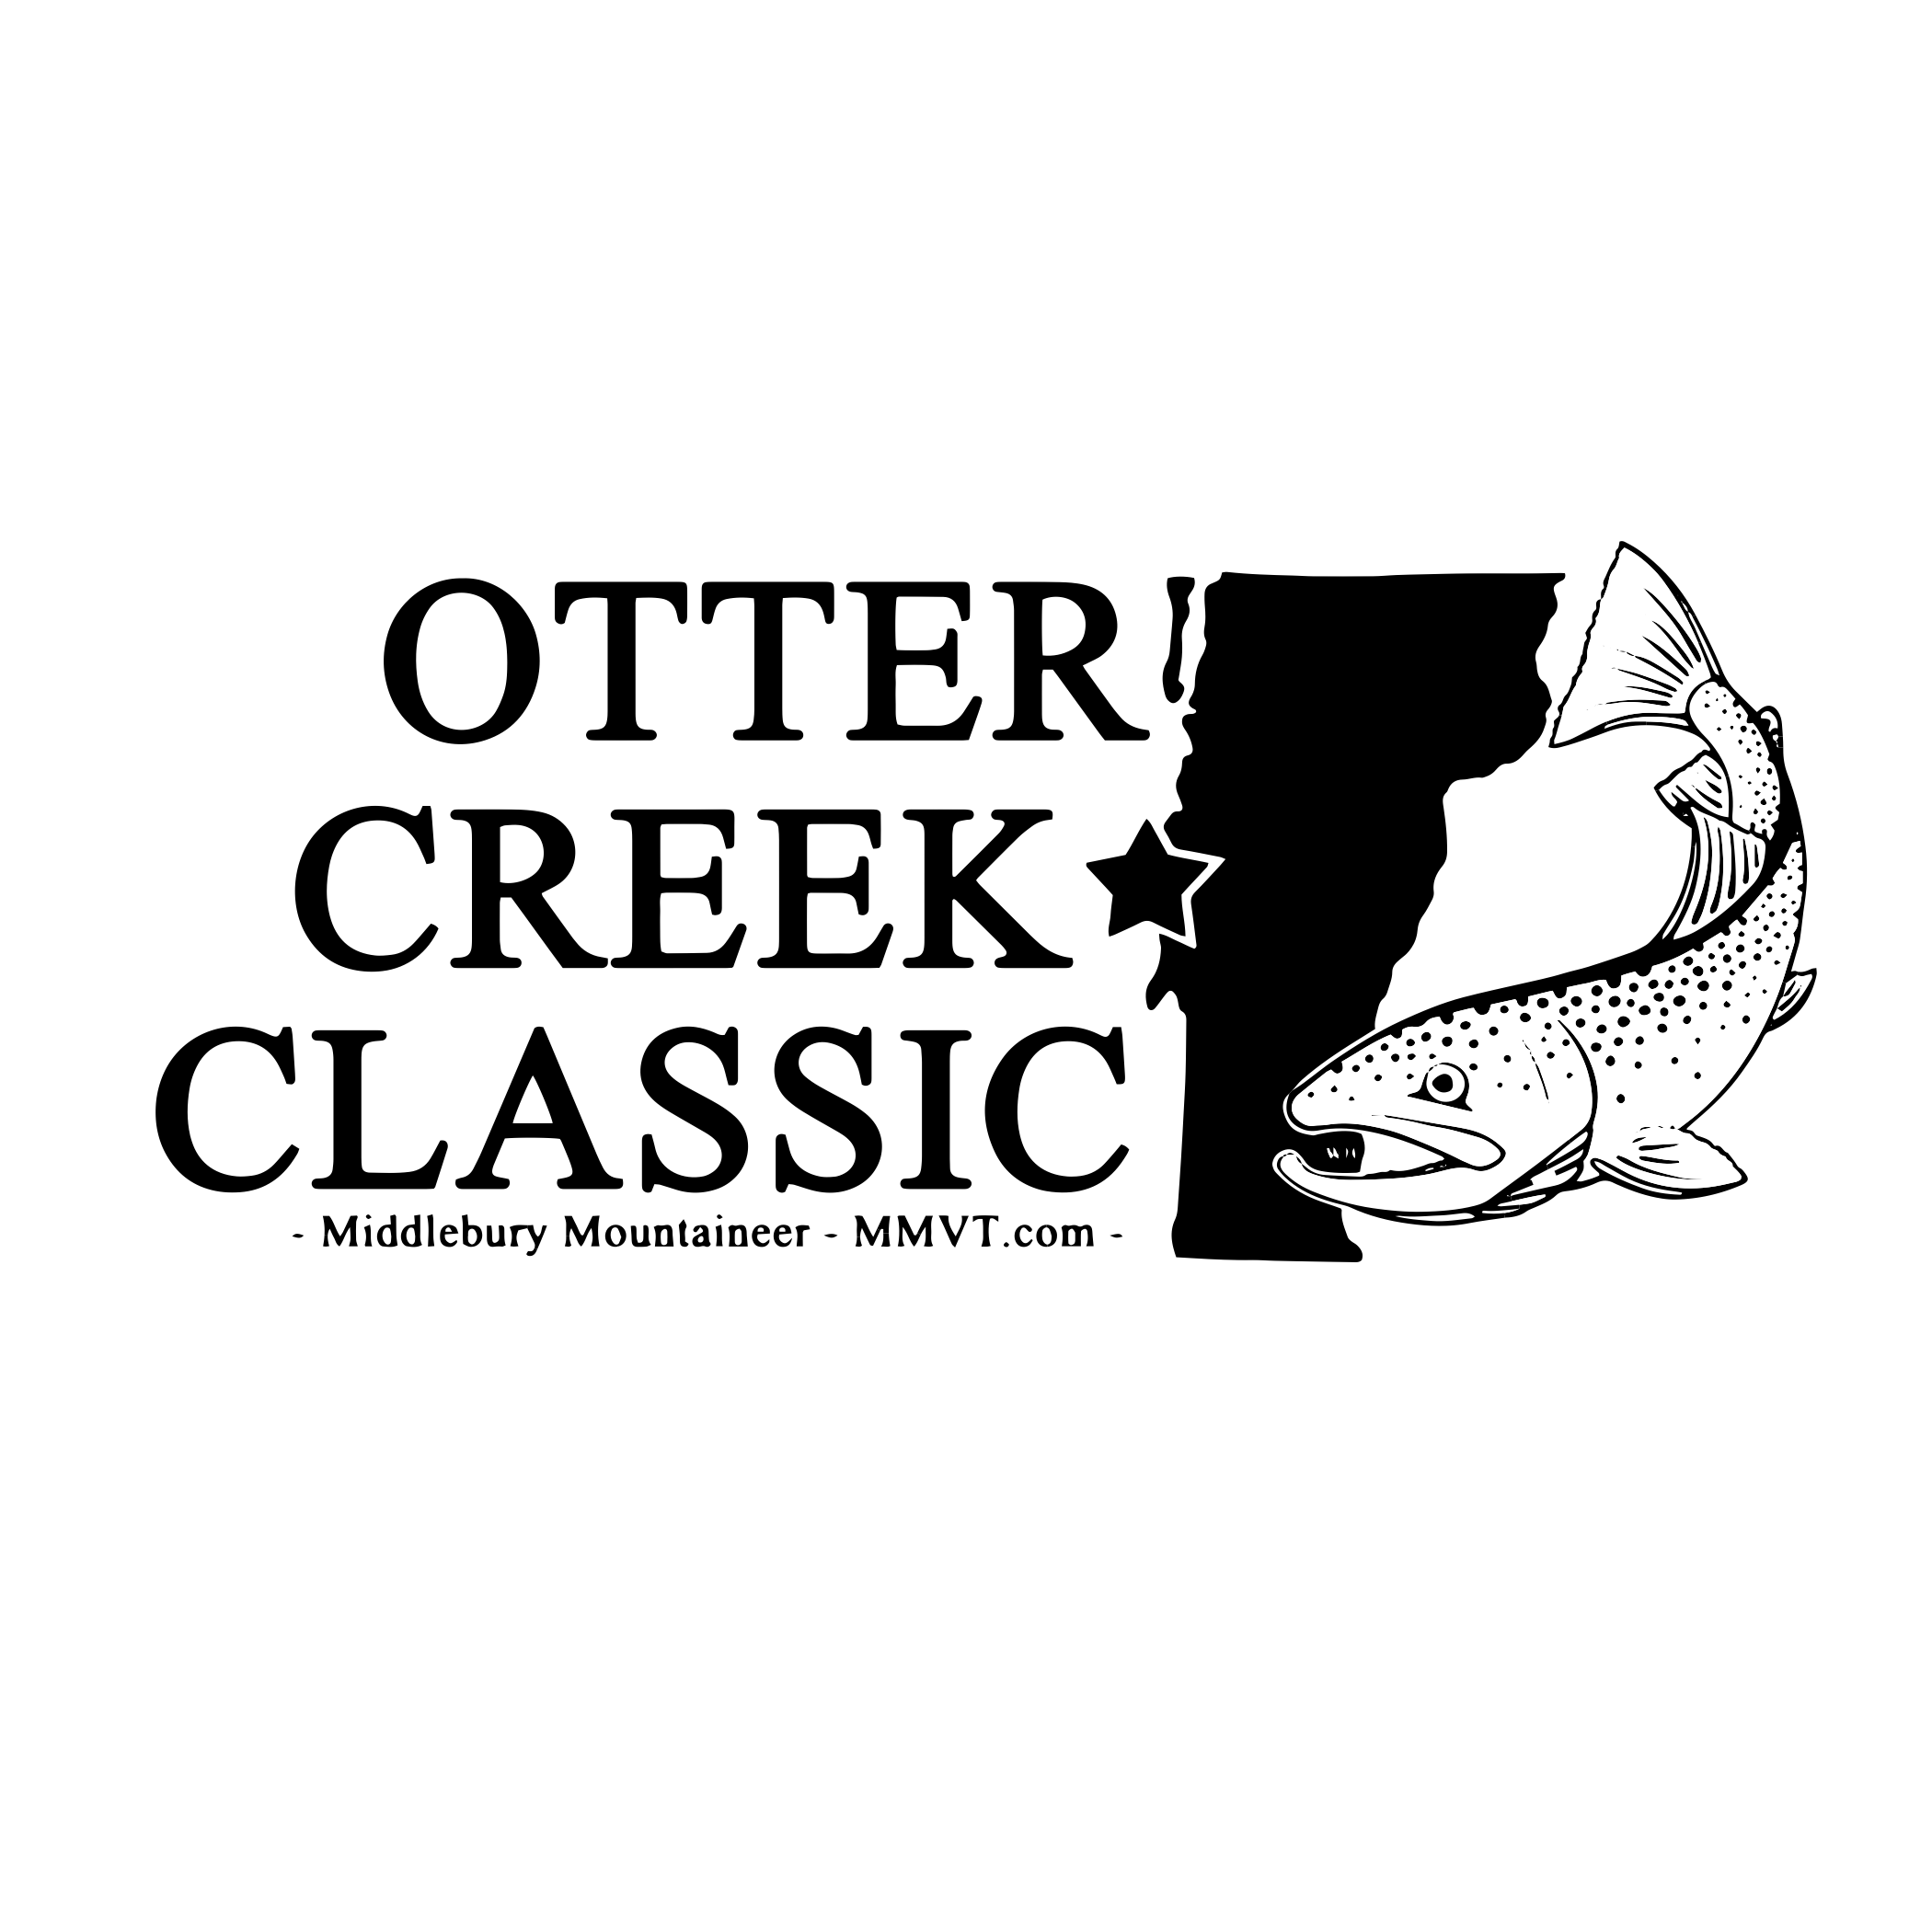 otter-creek-classic-12-11-apr-2020